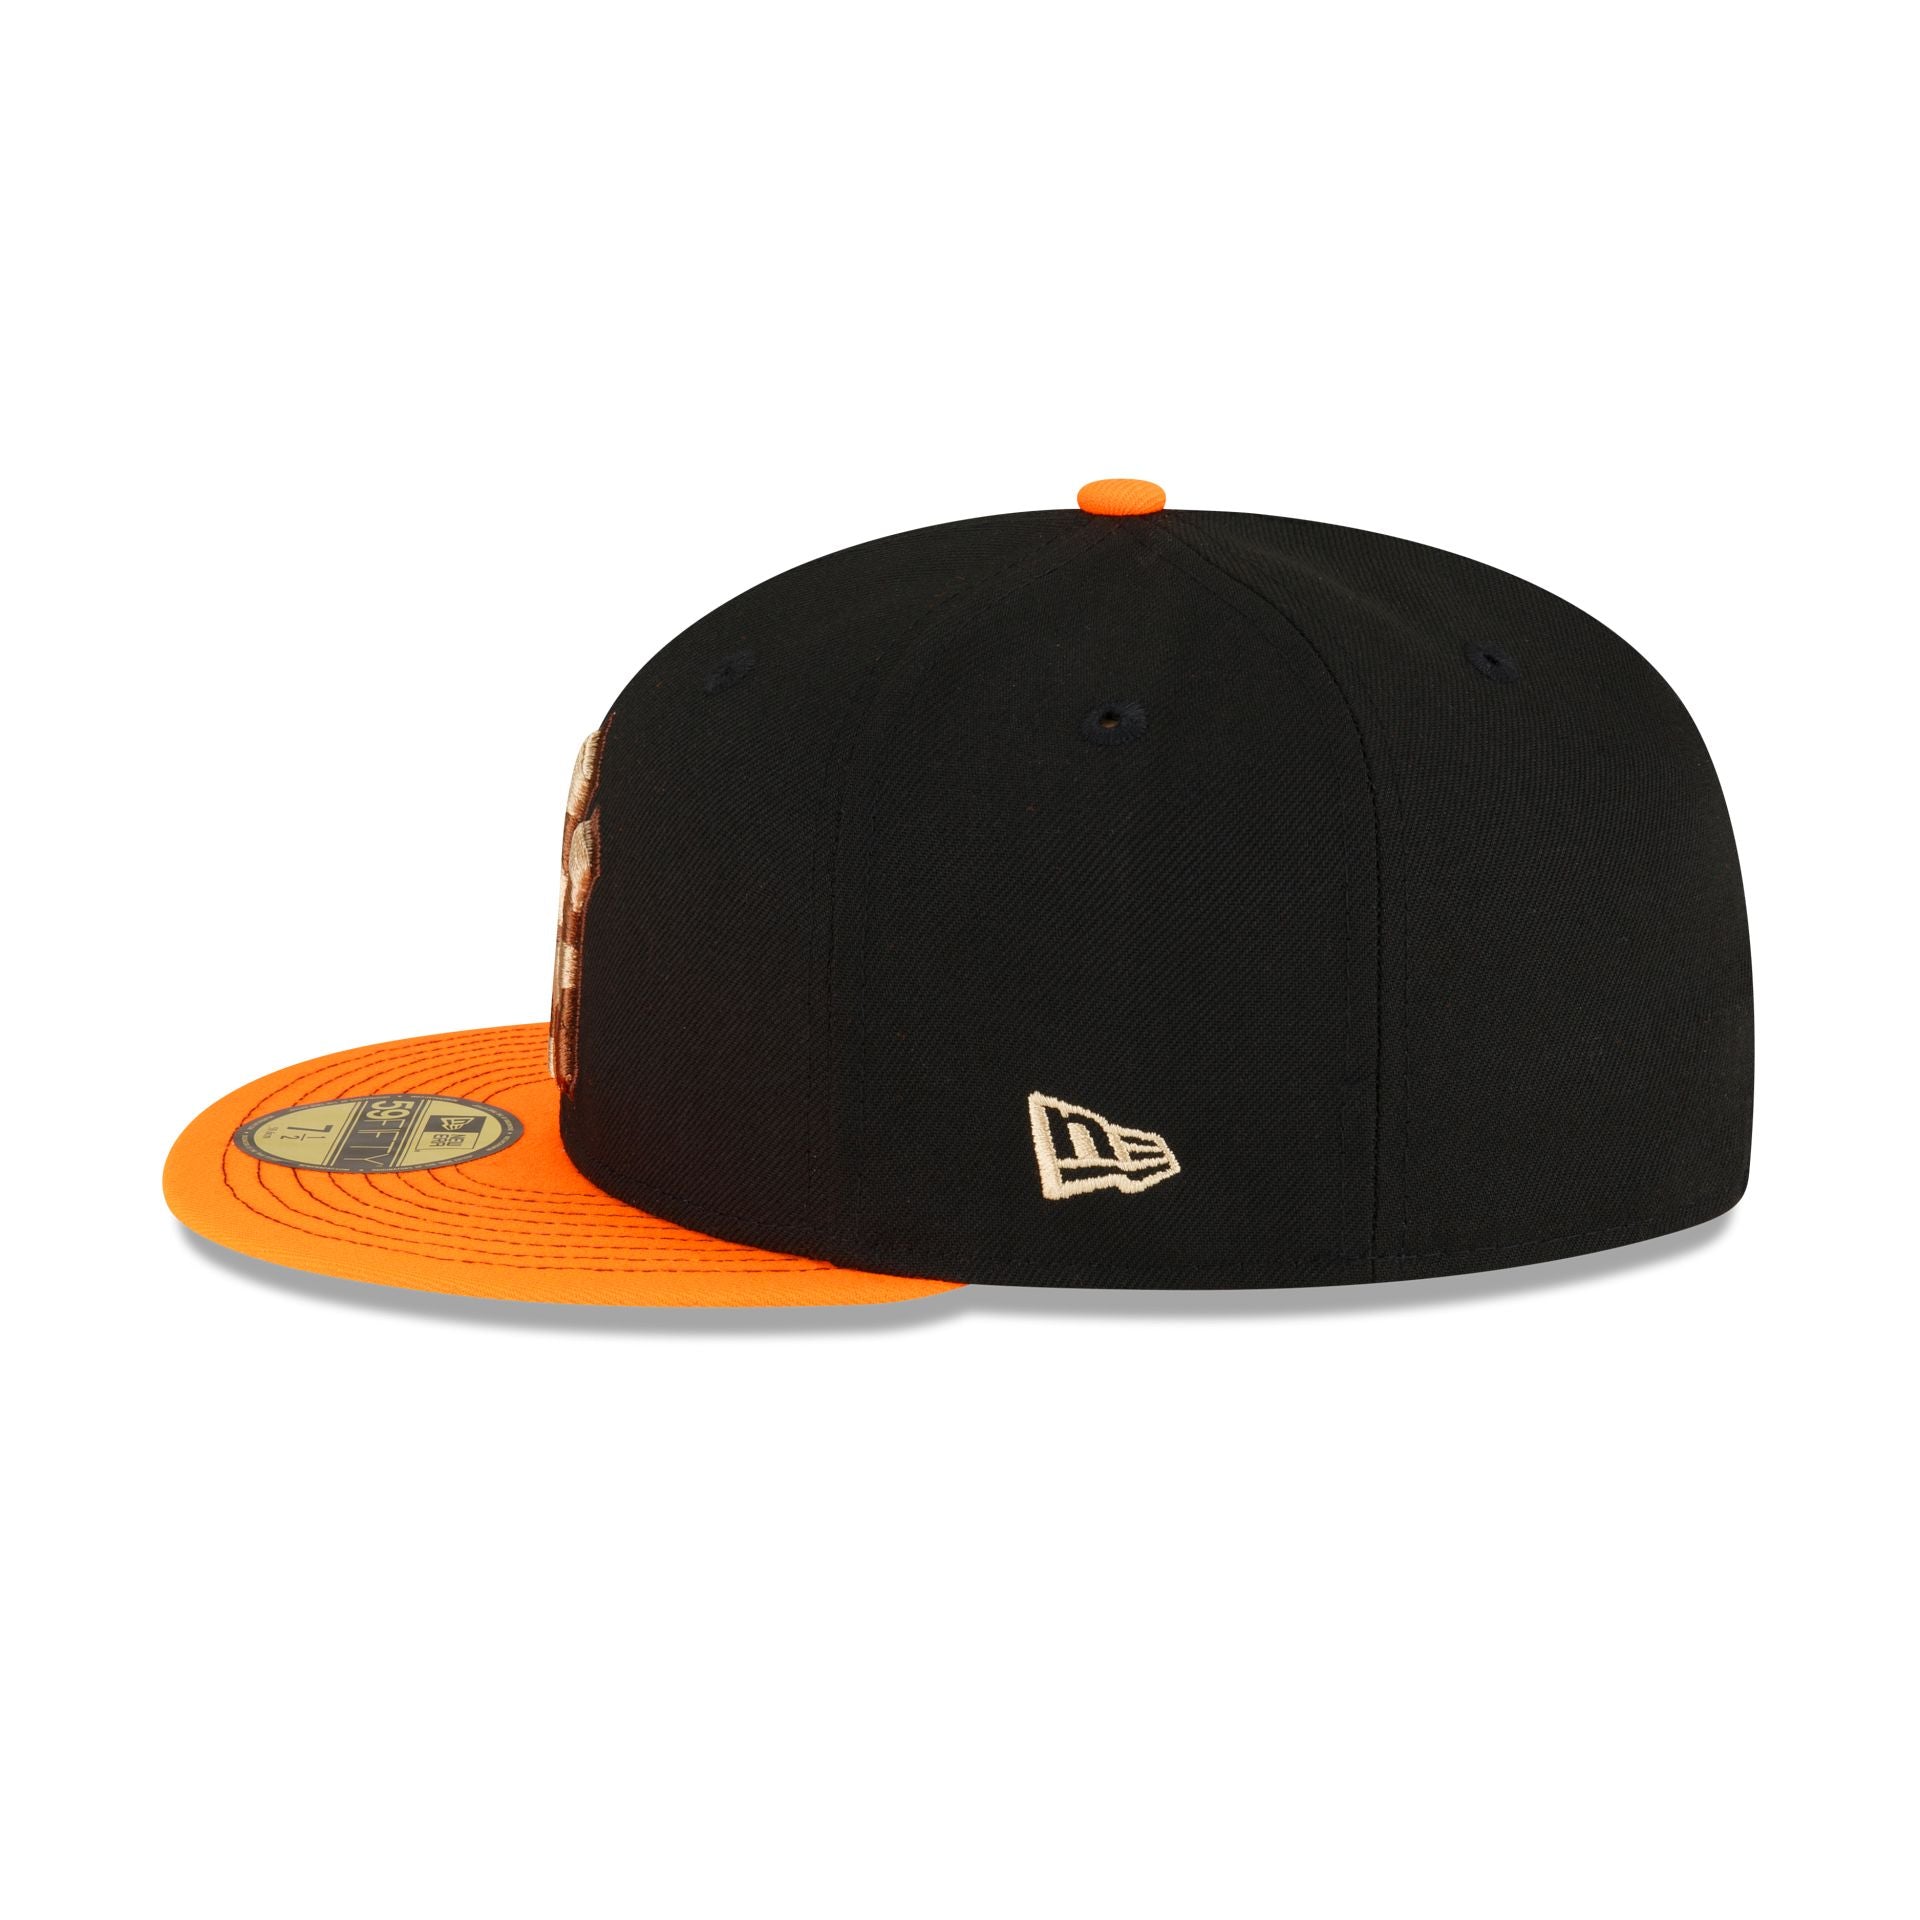 Orange Caps 59FIFTY – Just New Fitted New Hat Cap York Yankees Era Visor